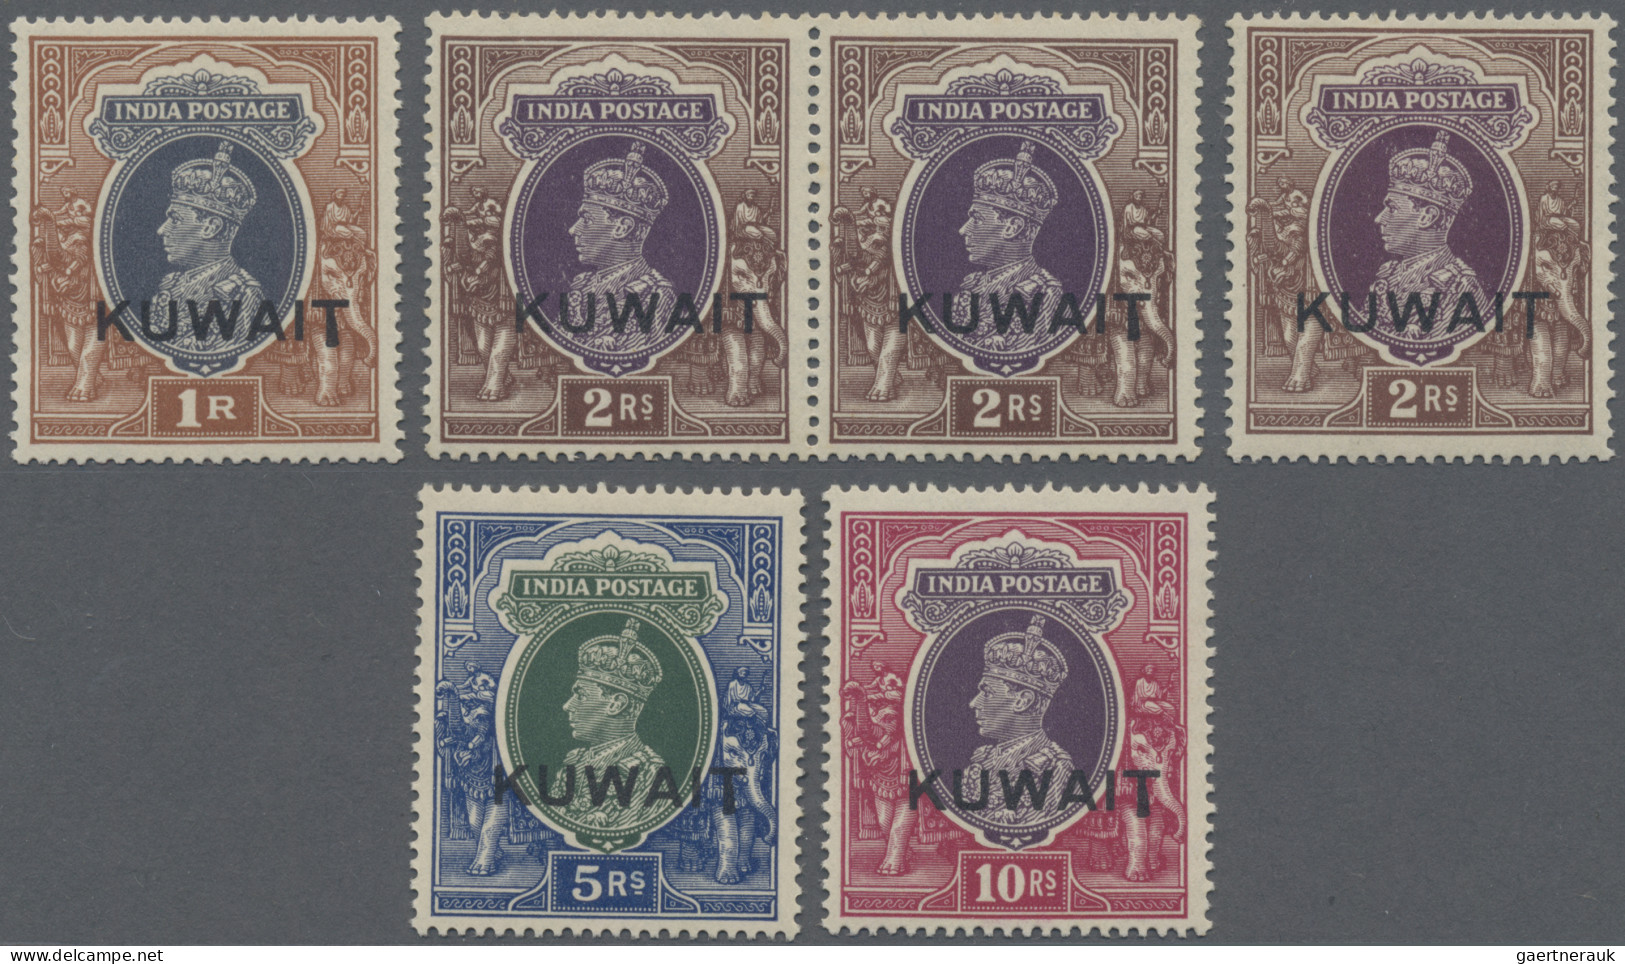 Kuwait: 1939 "KUWAIT" Overprint On KGVI. Rupee Values 1r., 2r., 5r. And 10r. Sho - Koweït